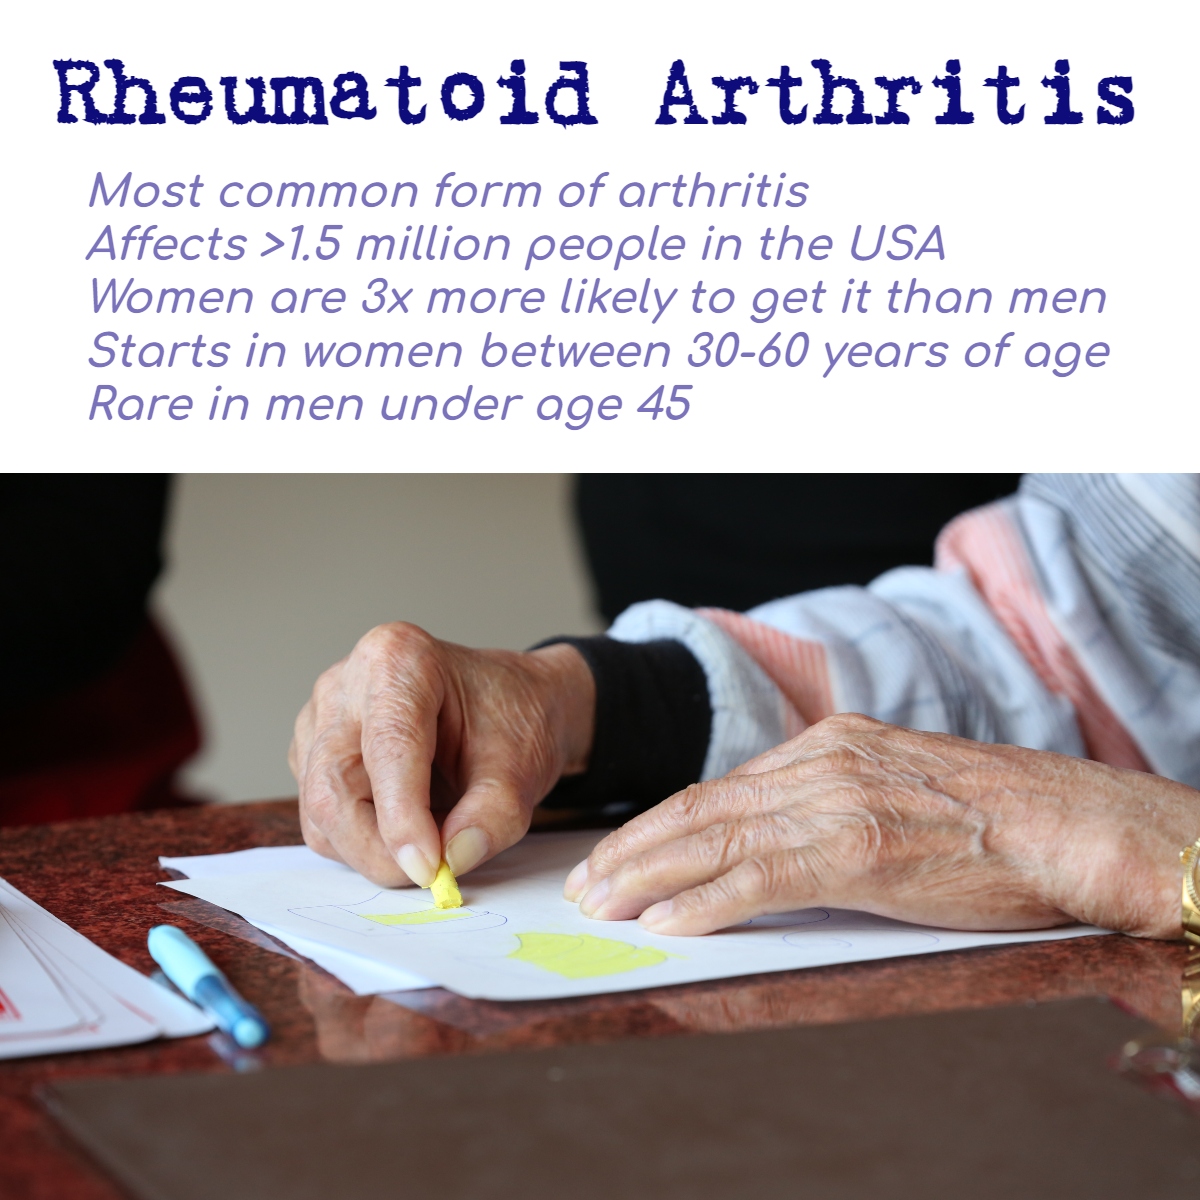 Rheumatoid arthritis (RA) is a systemic autoimmune inflammatory condition